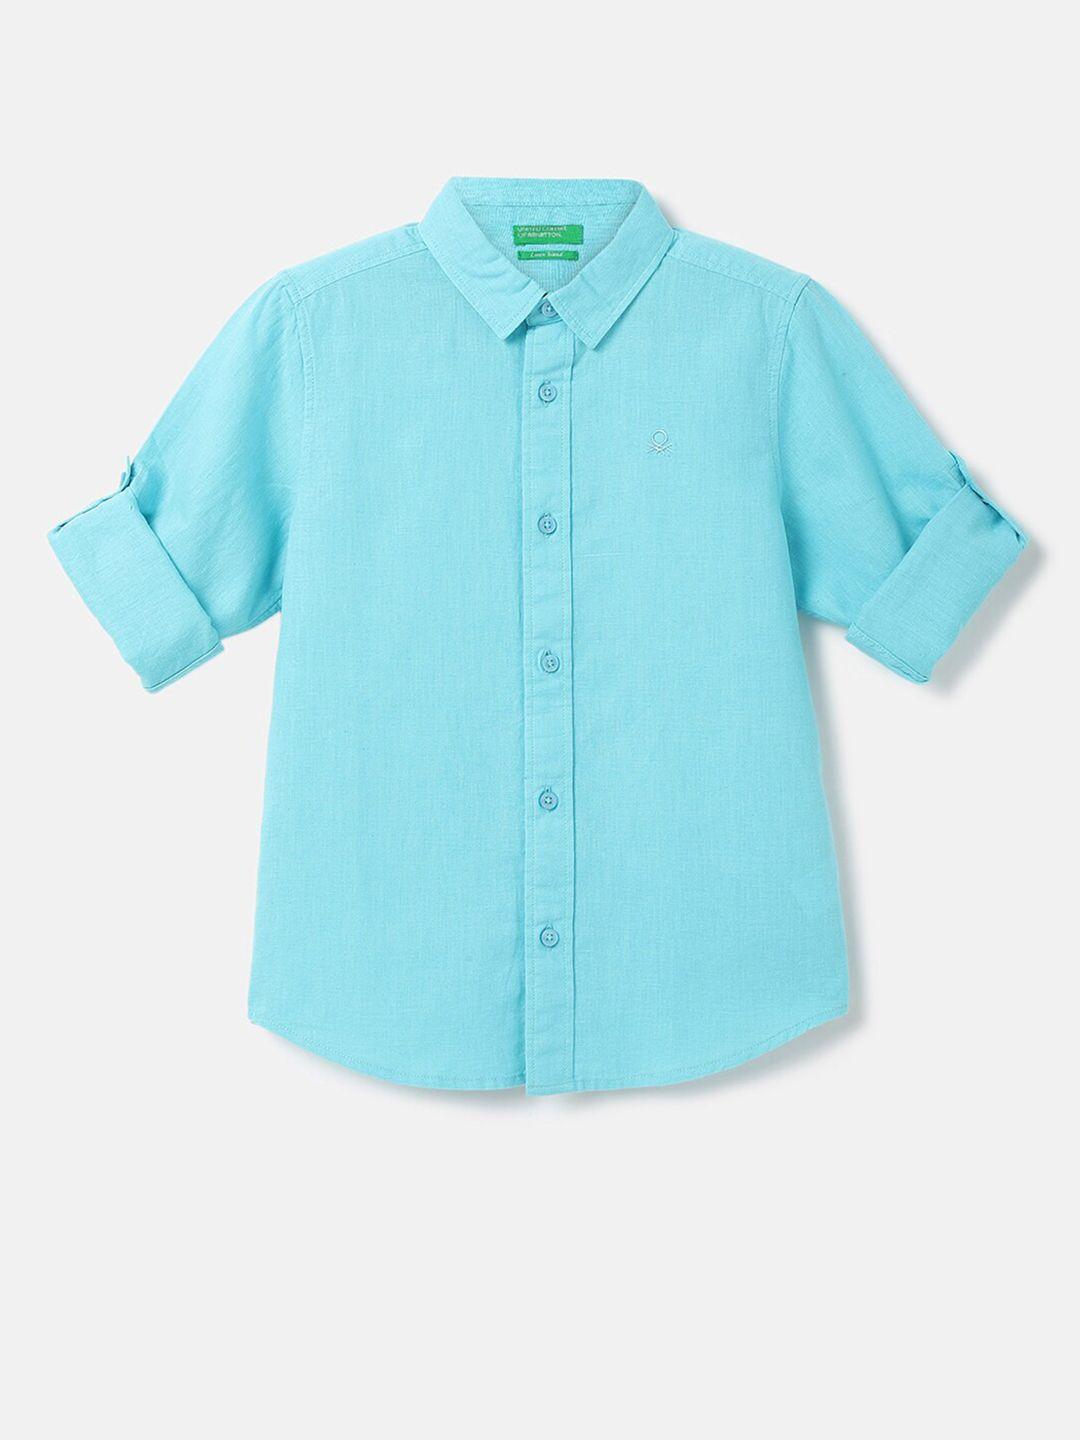 United Colors of Benetton Boys Spread Collar Casual Shirt